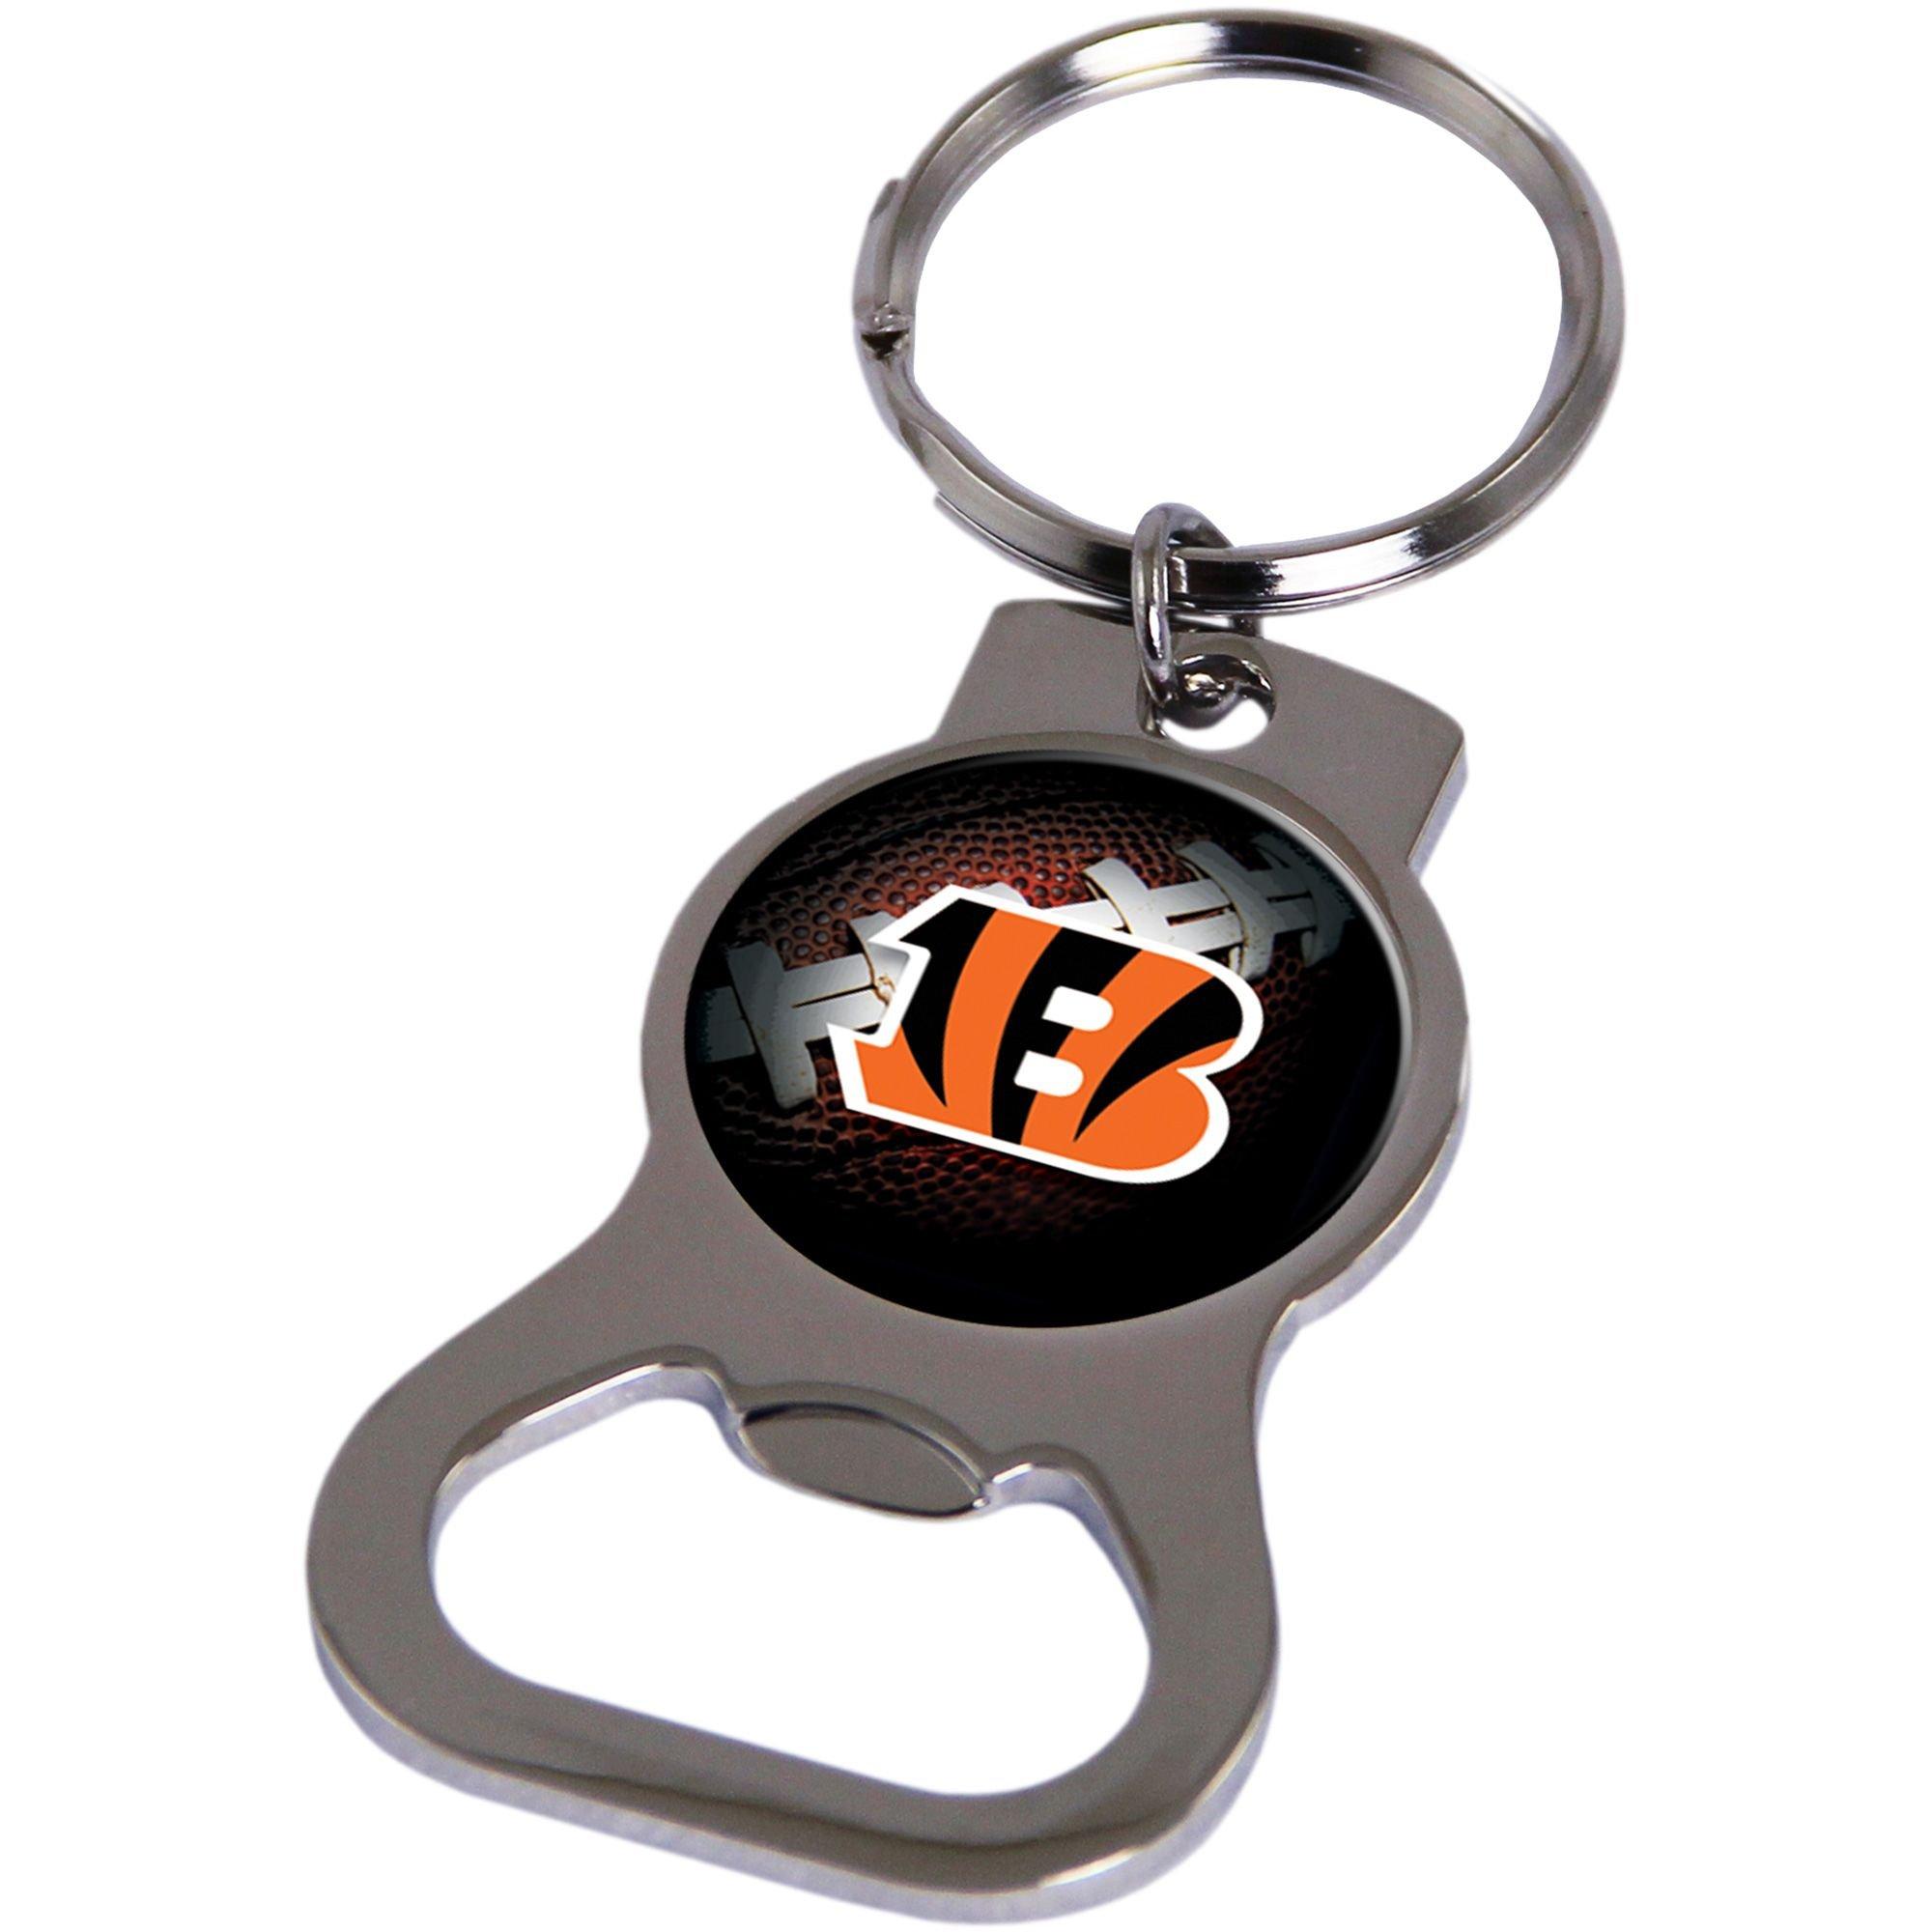 Lot of 2 Cincinnati Bengals Keychains // Keyring Key Chains